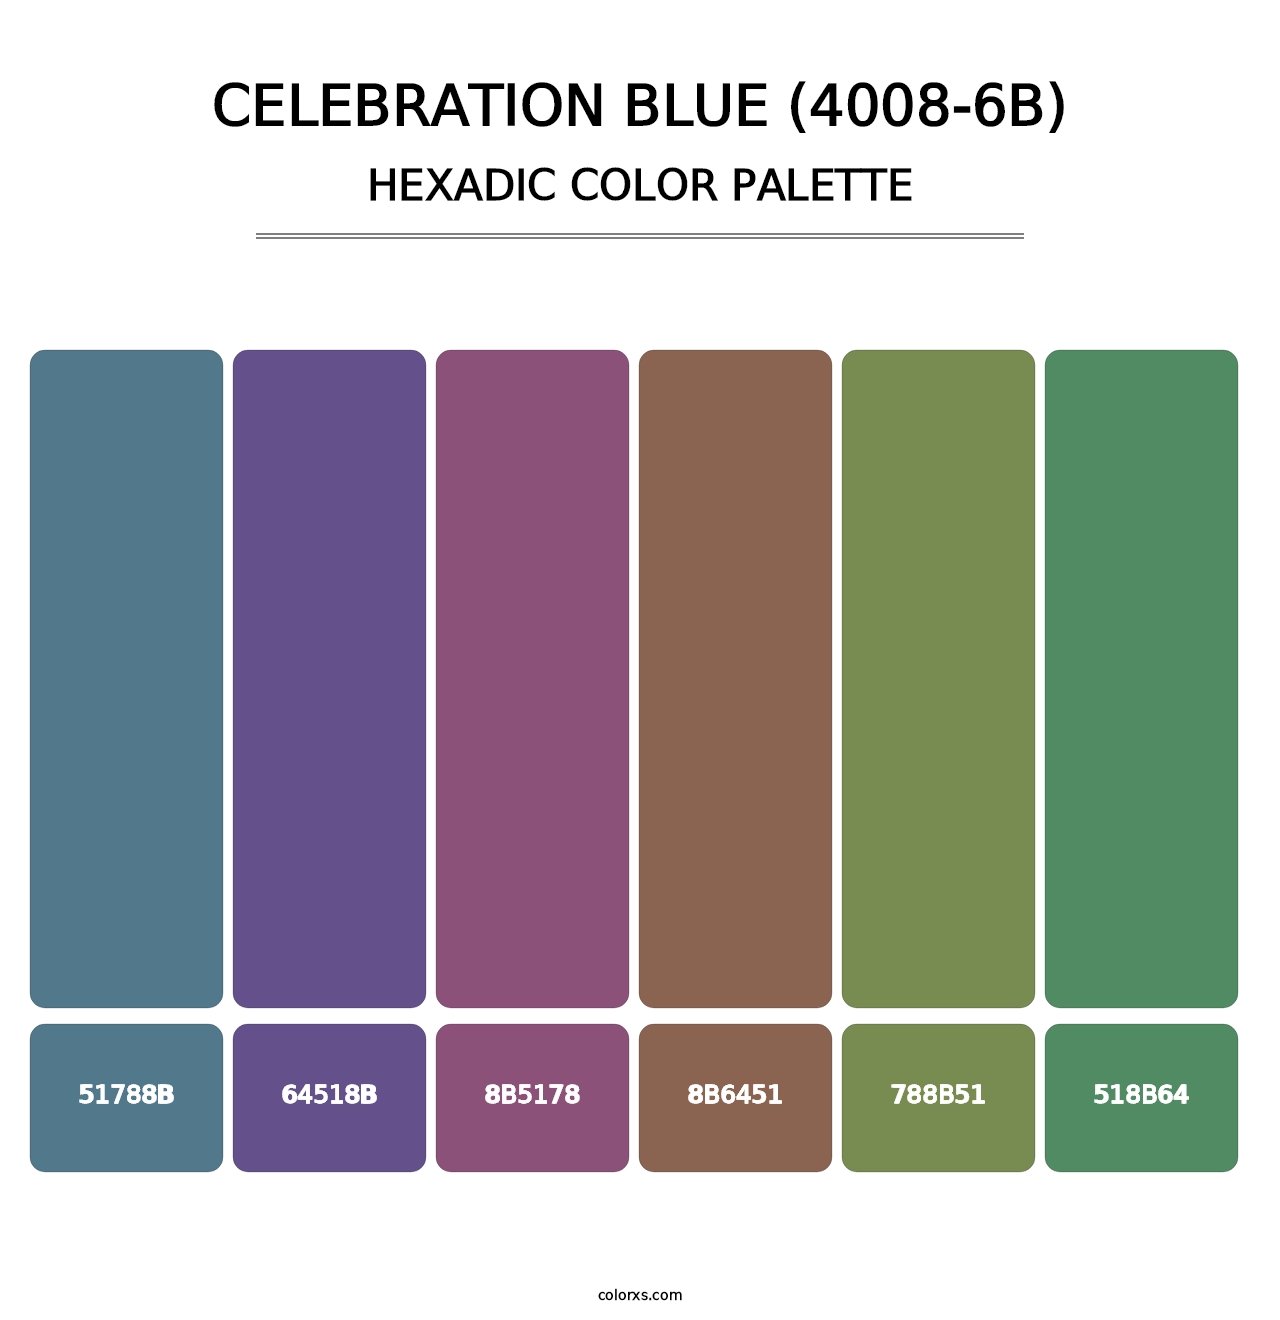 Celebration Blue (4008-6B) - Hexadic Color Palette